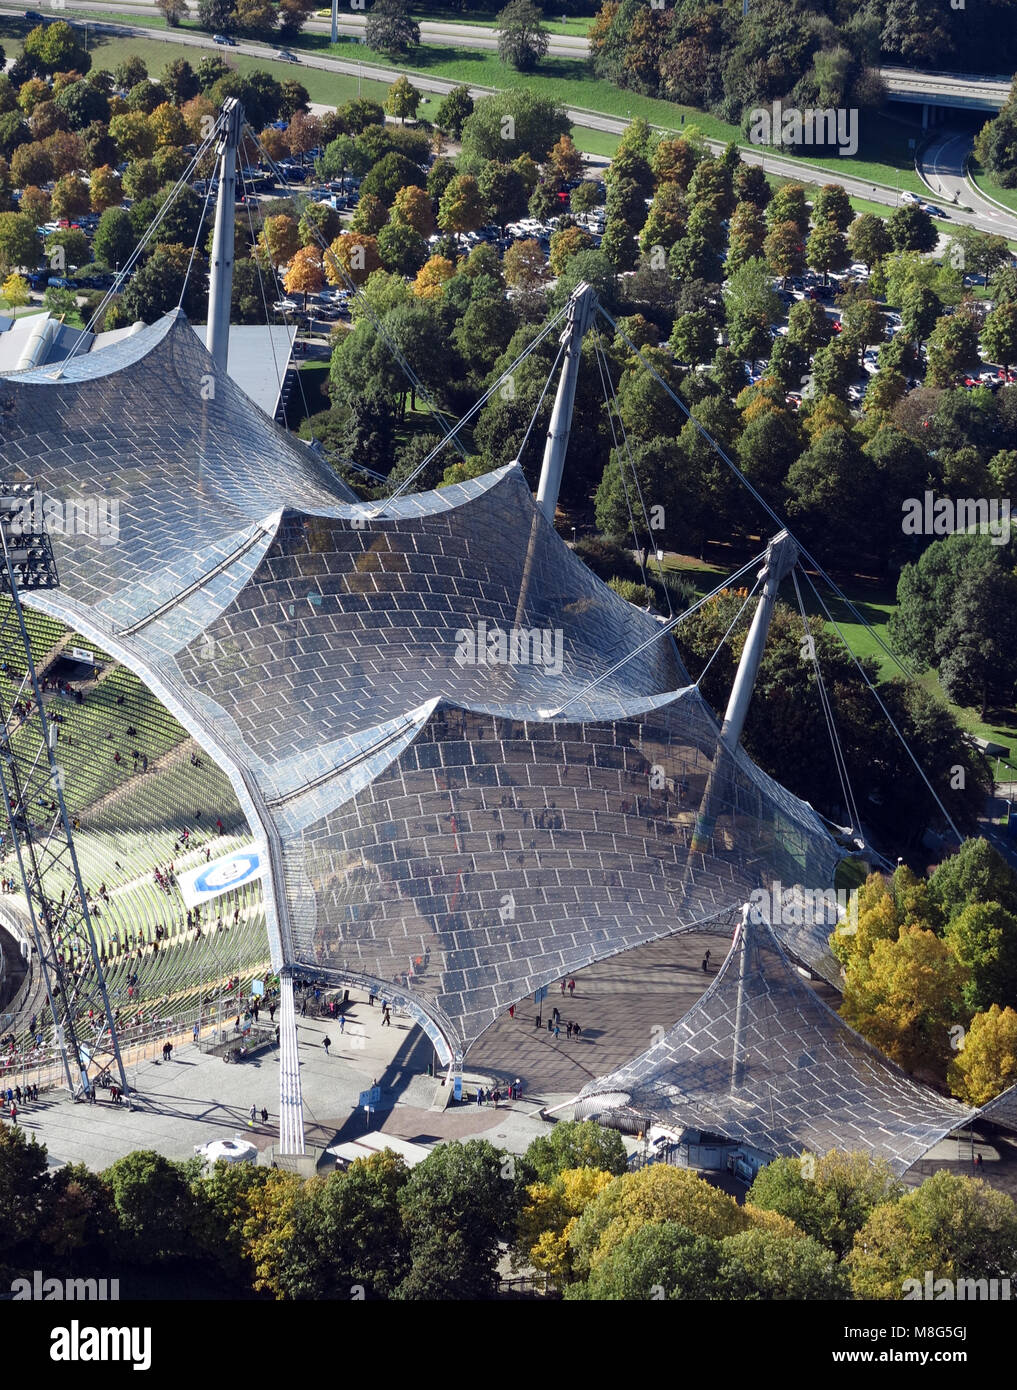 https://c8.alamy.com/comp/M8G5GJ/the-famous-roof-of-the-munich-olympic-stadium-designed-by-behnisch-M8G5GJ.jpg